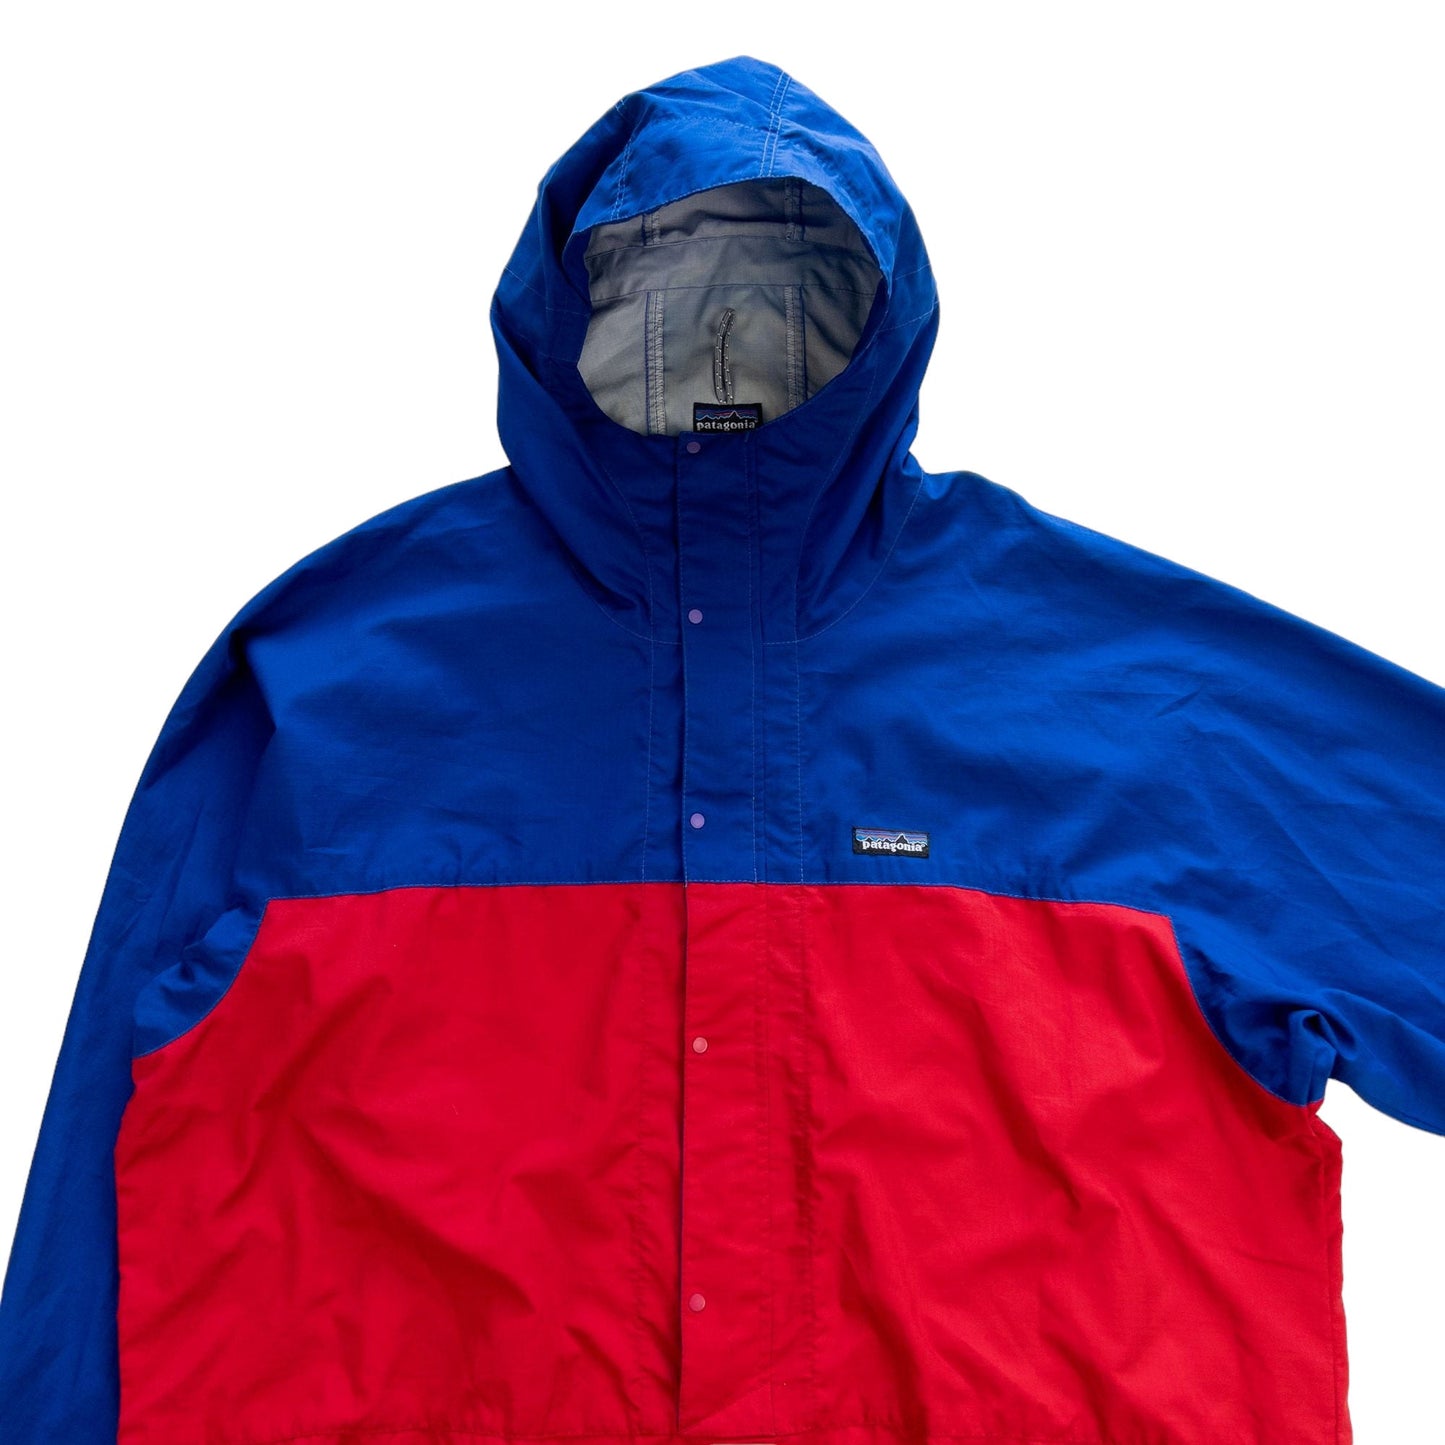 Vintage Patagonia Pulover Jacket Size XL